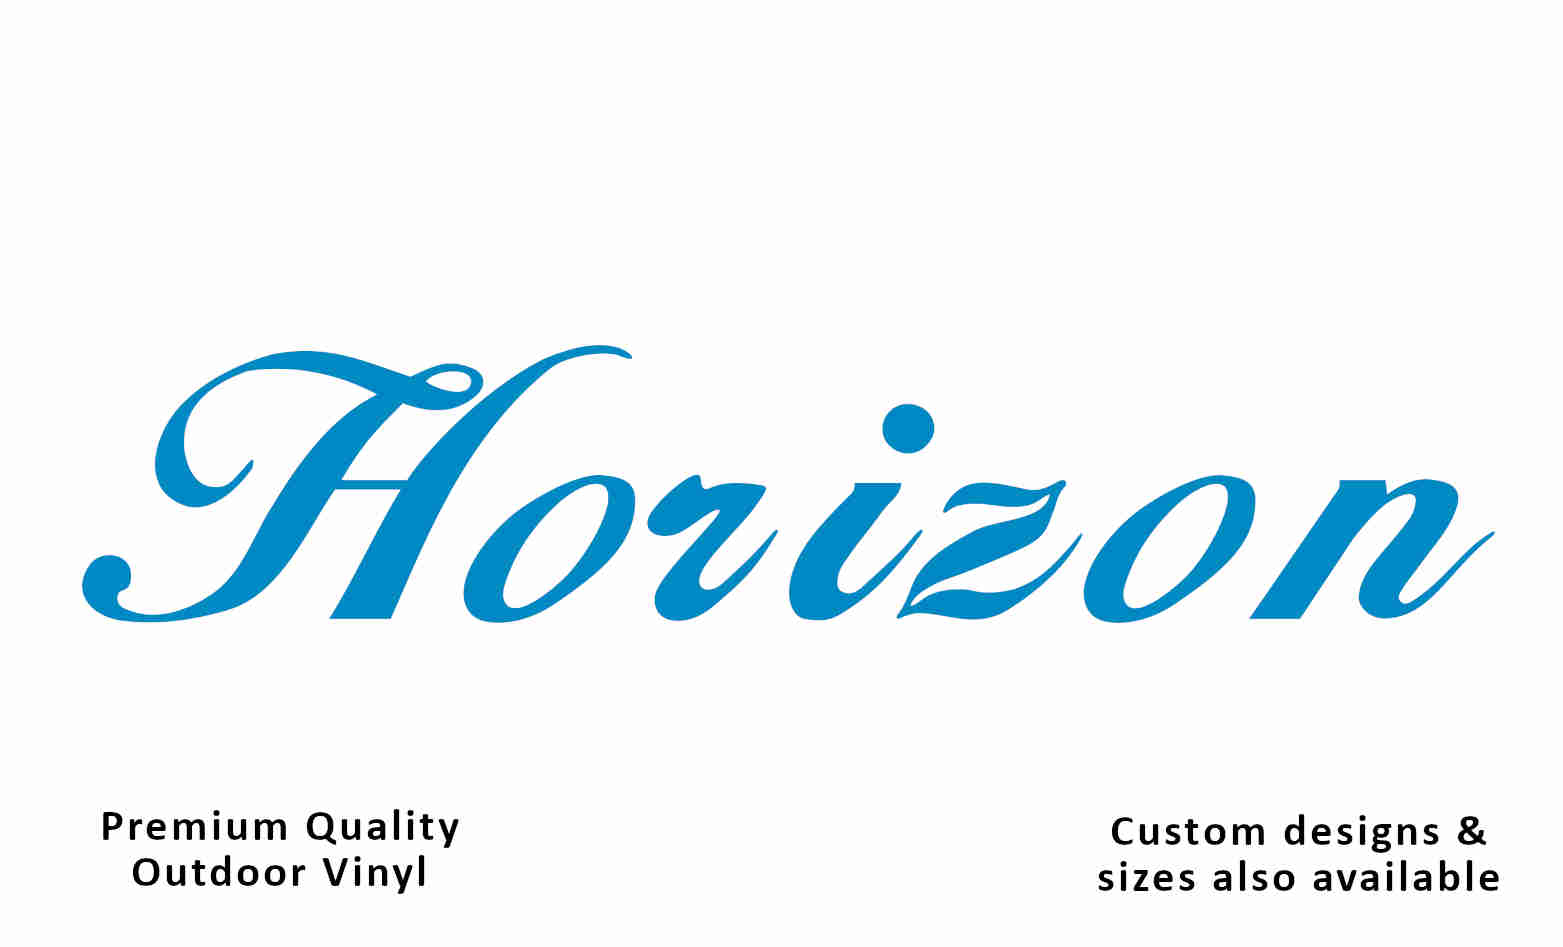 Millard horizon 2006-2008 caravan vinyl replacement decal sticker in light blue.